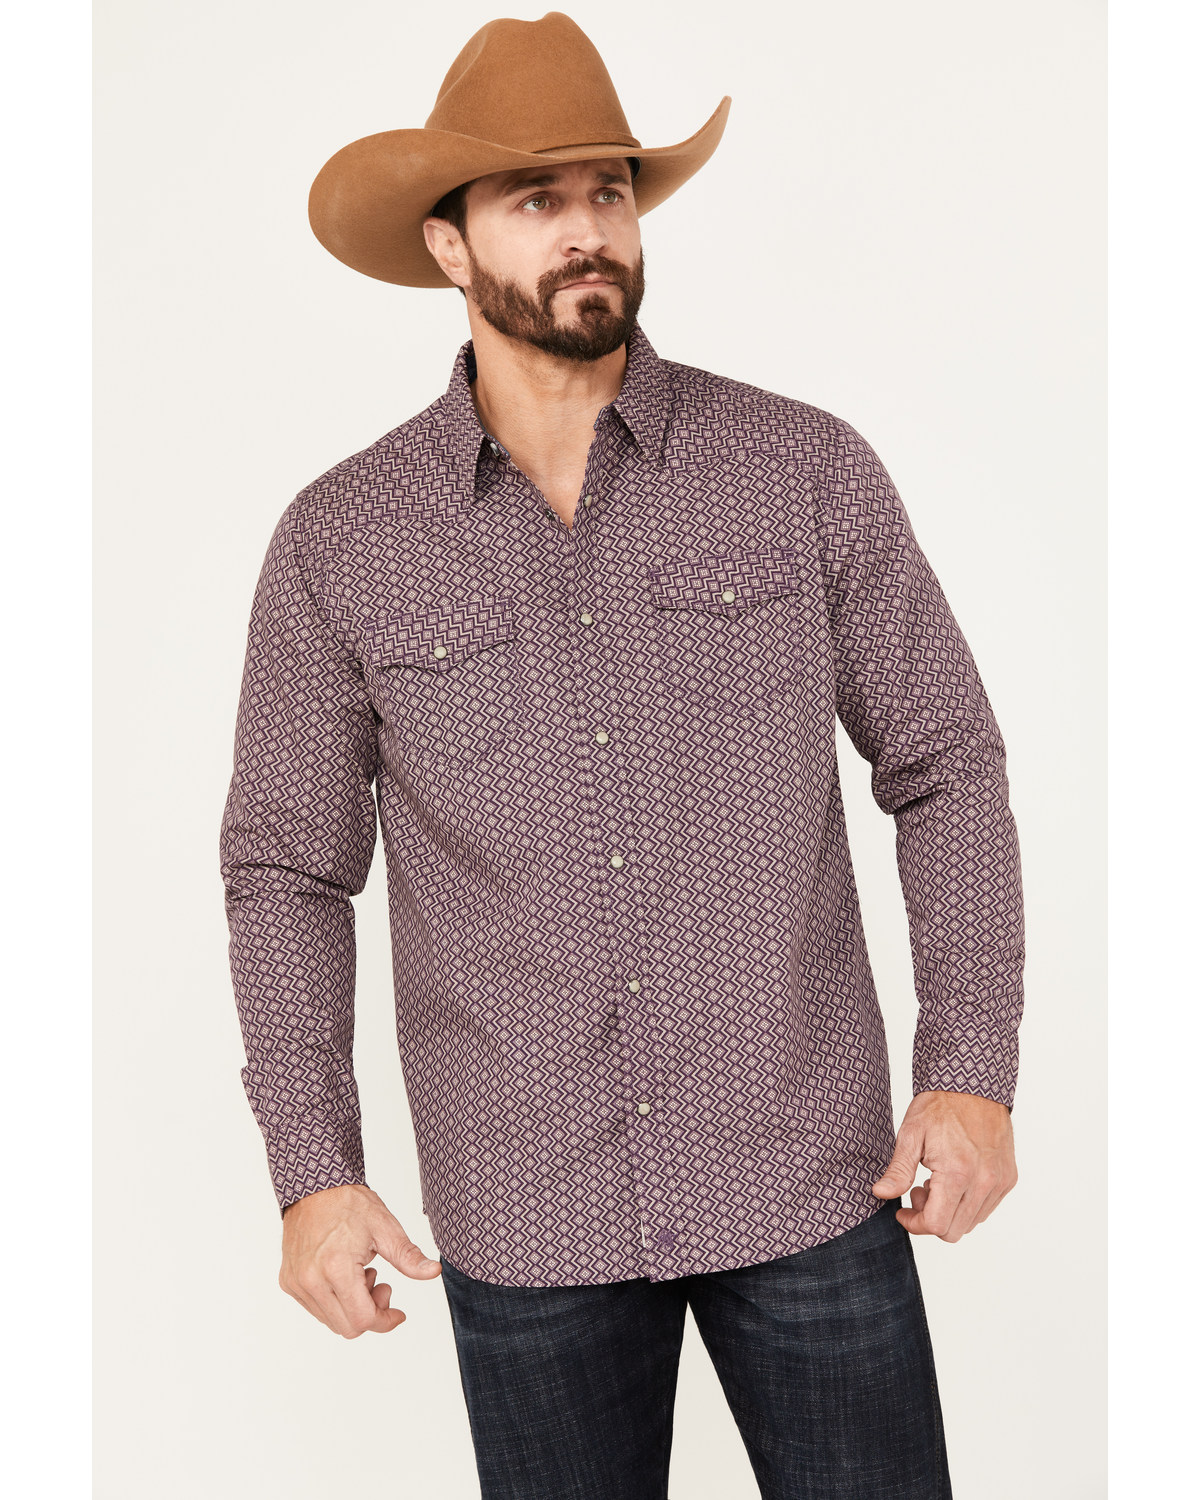 Moonshine Spirit Men's Southwestern Print Long Sleeve Western Pearl Snap Shirt